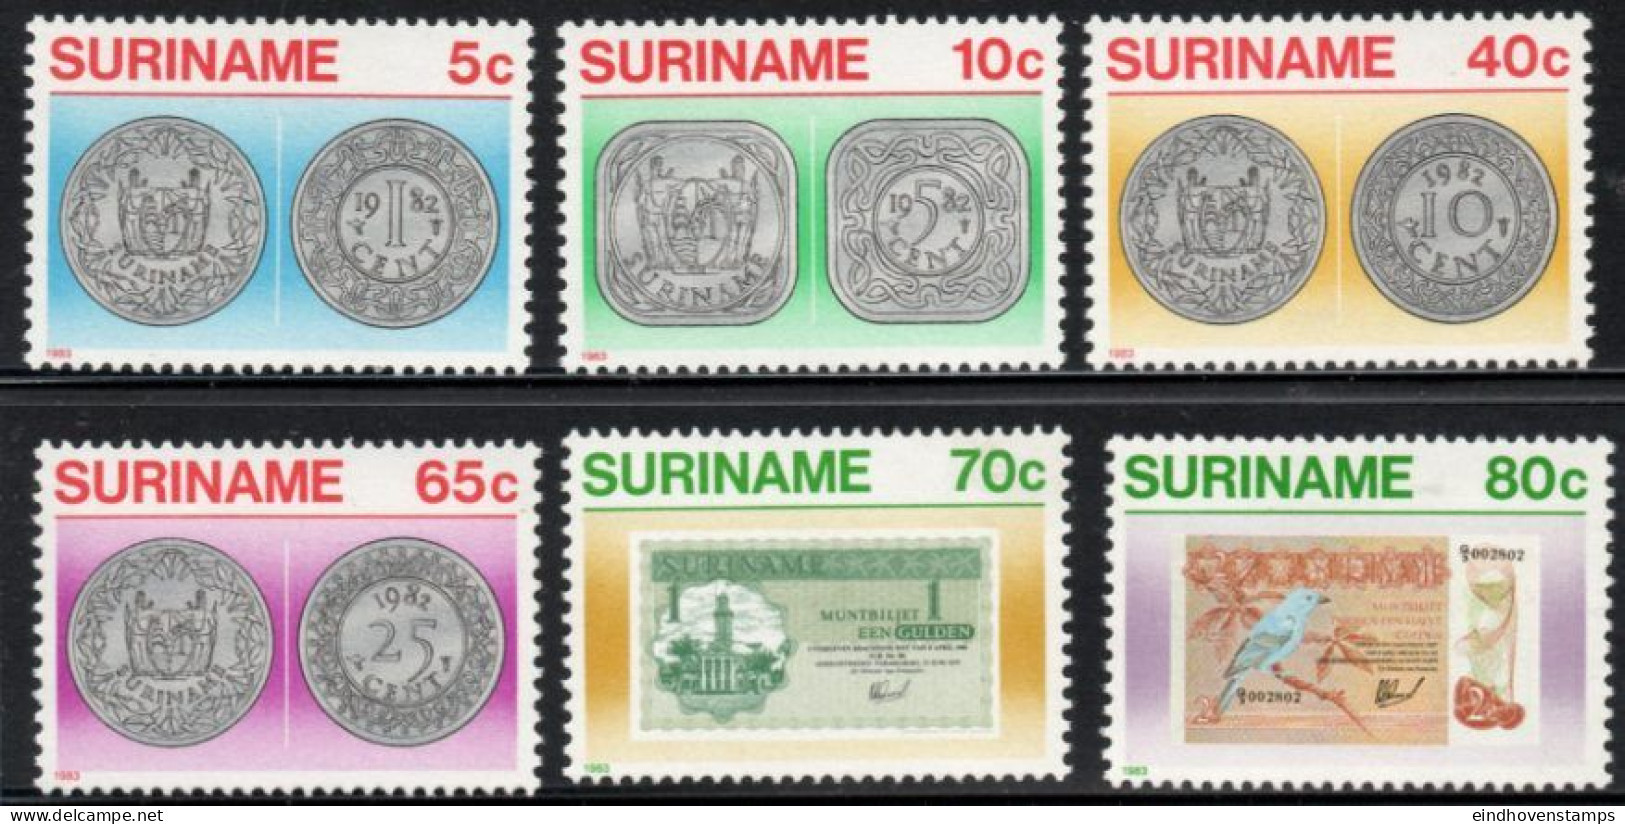 Suriname 1983 Coins & Banknotes, 6 Values MNH - Monete